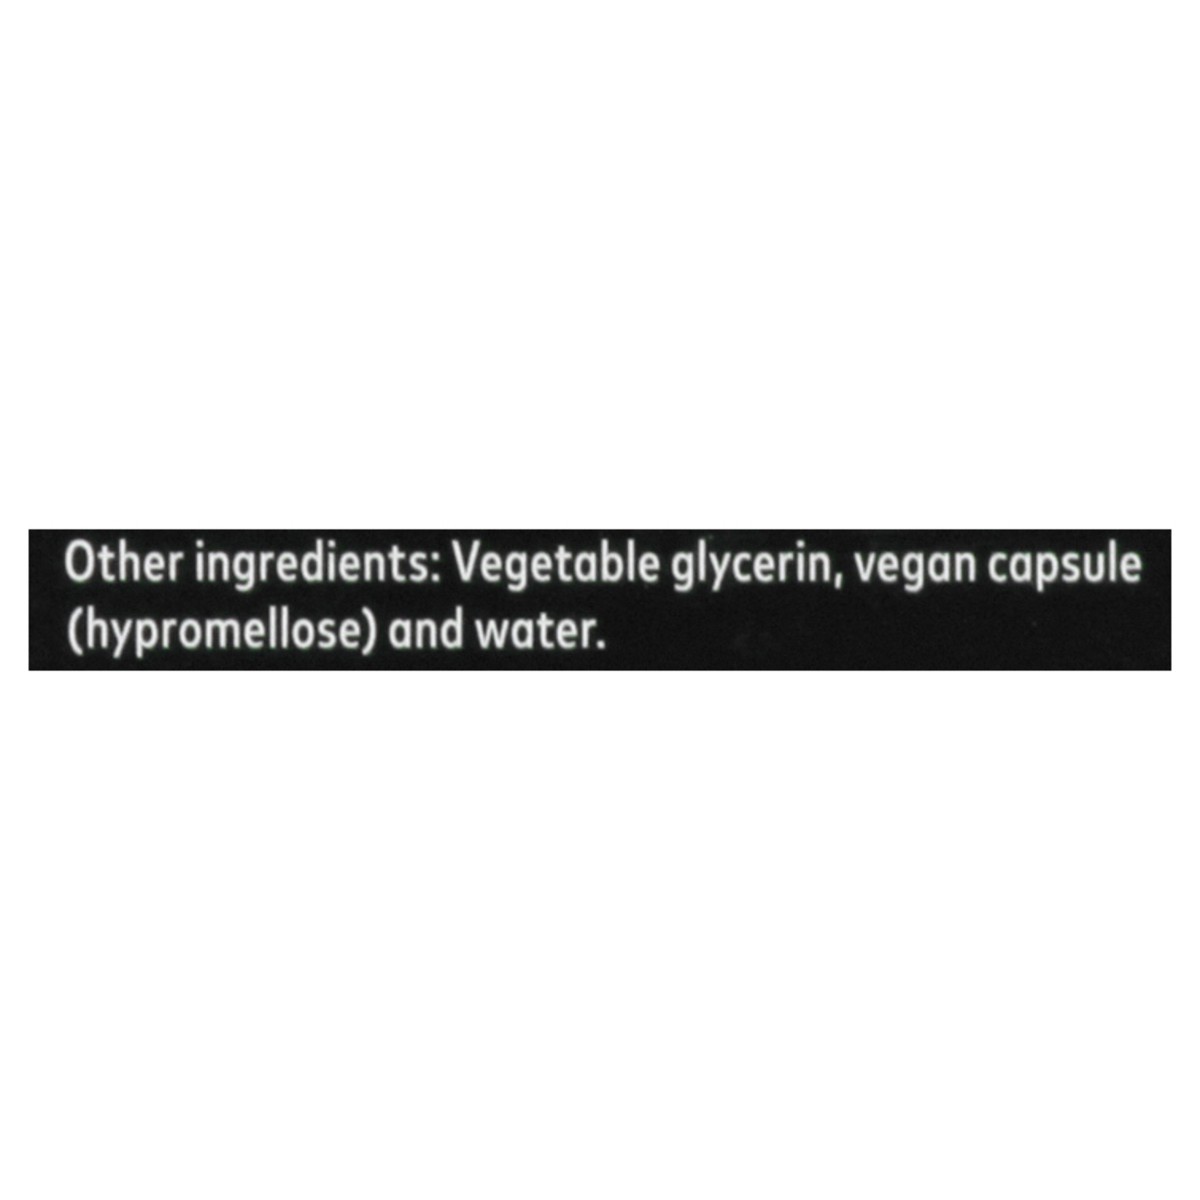 slide 6 of 13, Gaia Herbs Vegan Liquid Phyto-Caps Resveratrol 150 50 ea, 50 ct